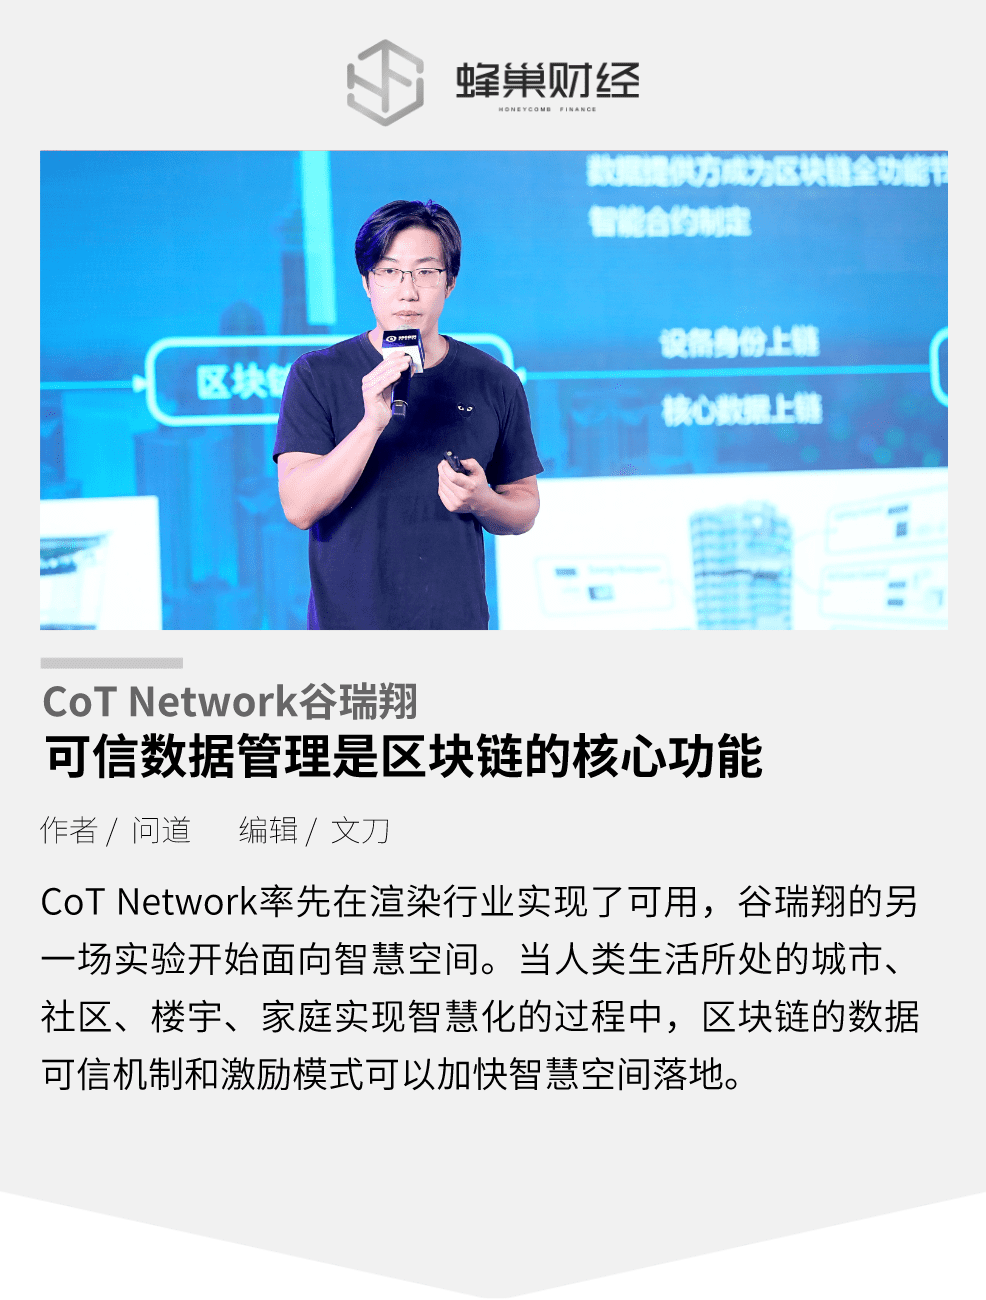 CoT Network谷瑞翔：可信数据管理是区块链的核心功能